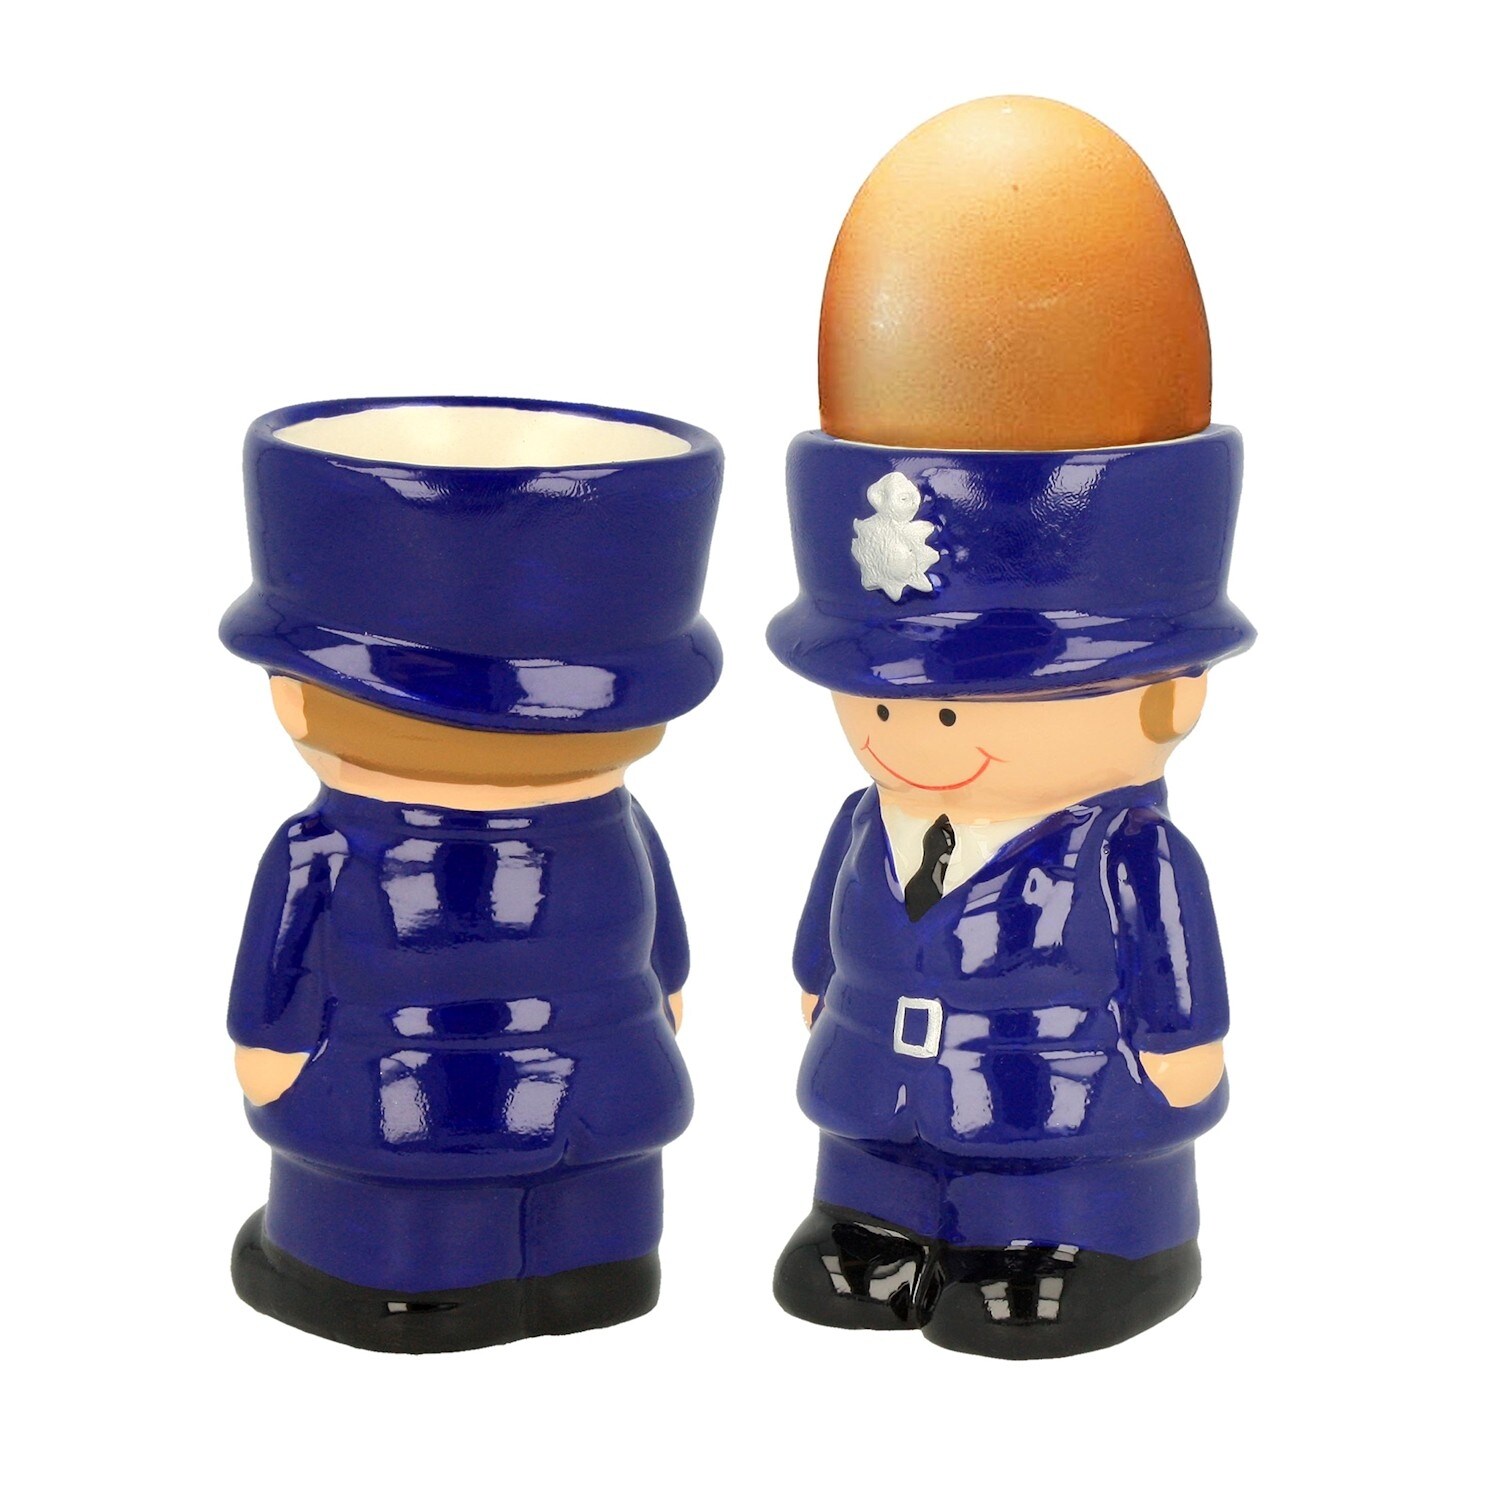 Elgate Products Ceramic British Egg Cups - Decorative Soft Boiled